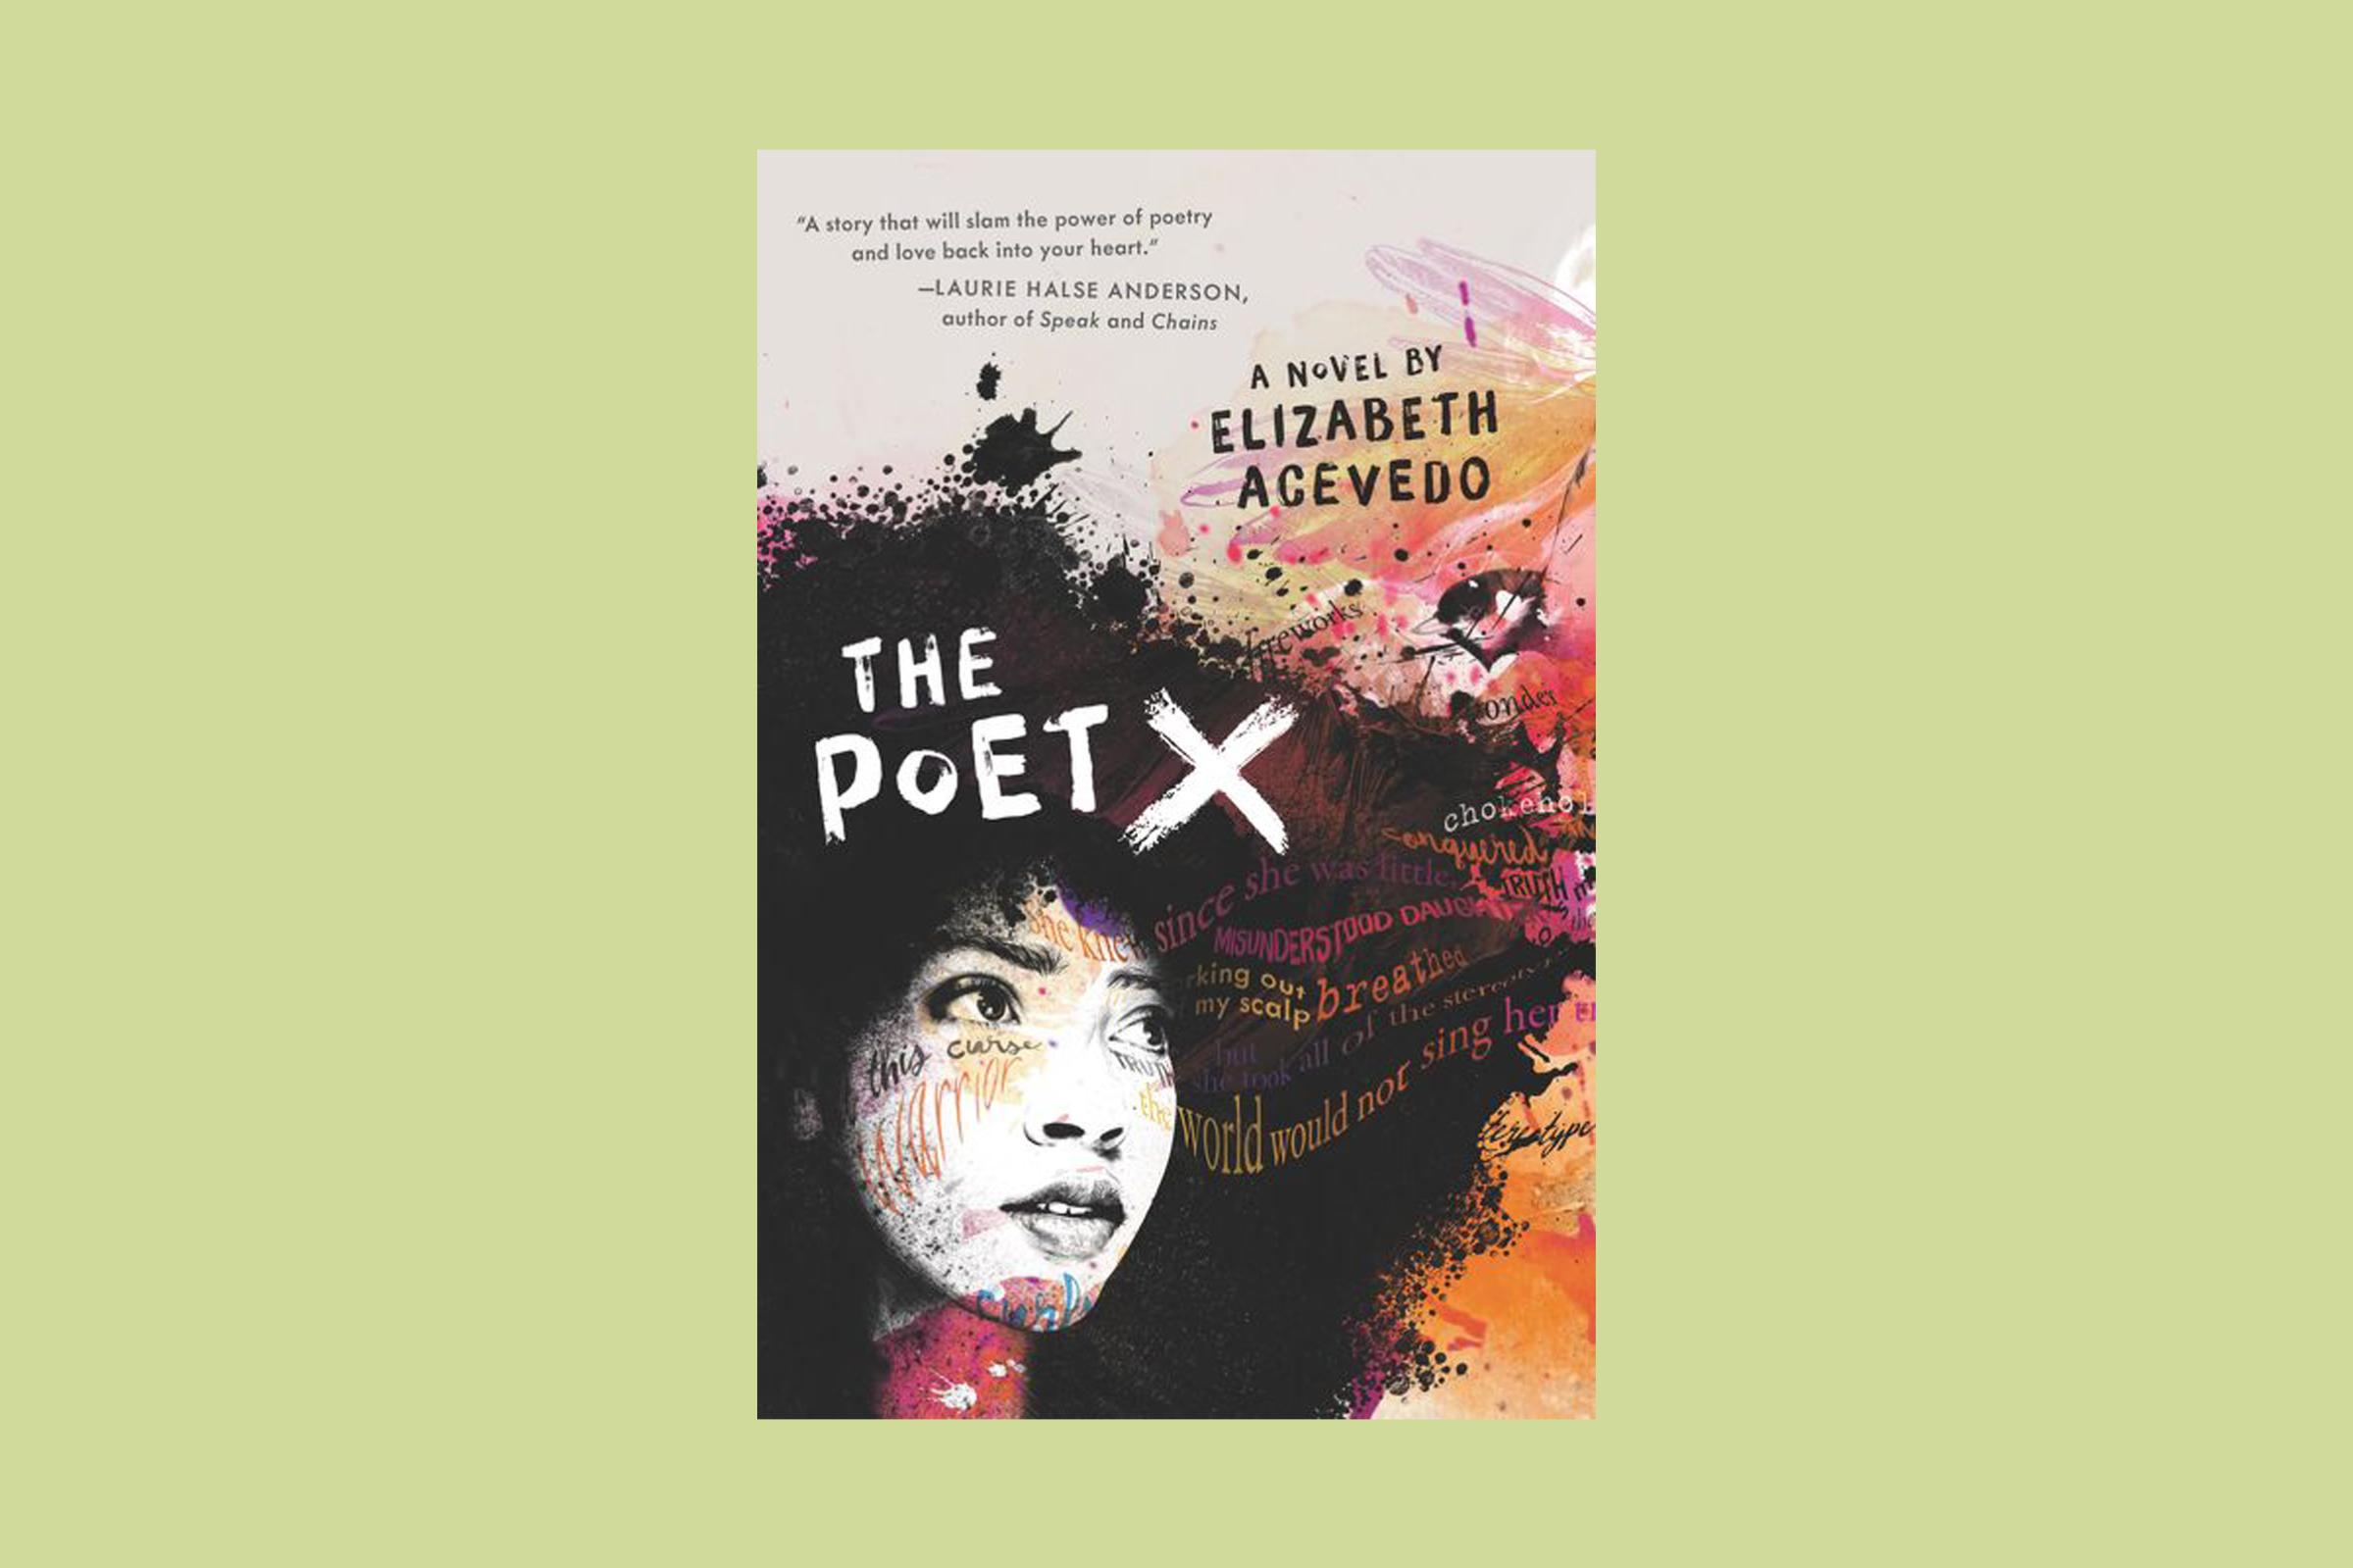 The Poet X by Elizabeth Acevedo